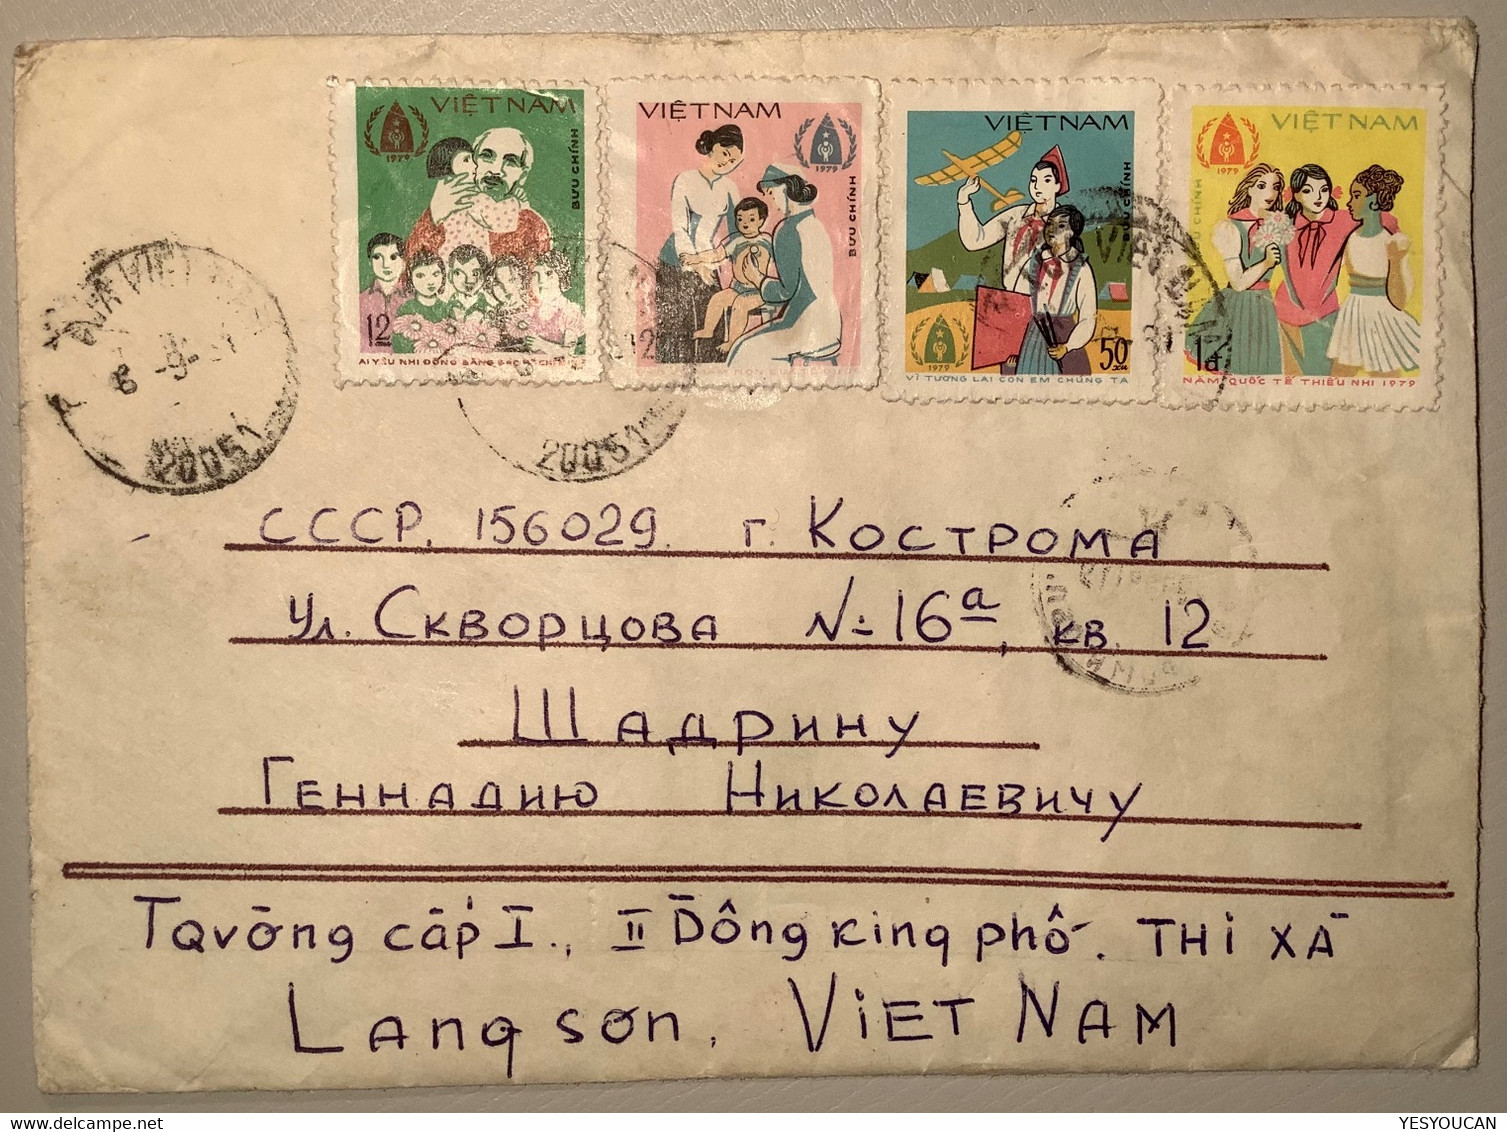 Vietnam 1979 YEAR OF THE CHILD UNICEF Cover (Viet Nam Lettre Children Enfant - Vietnam